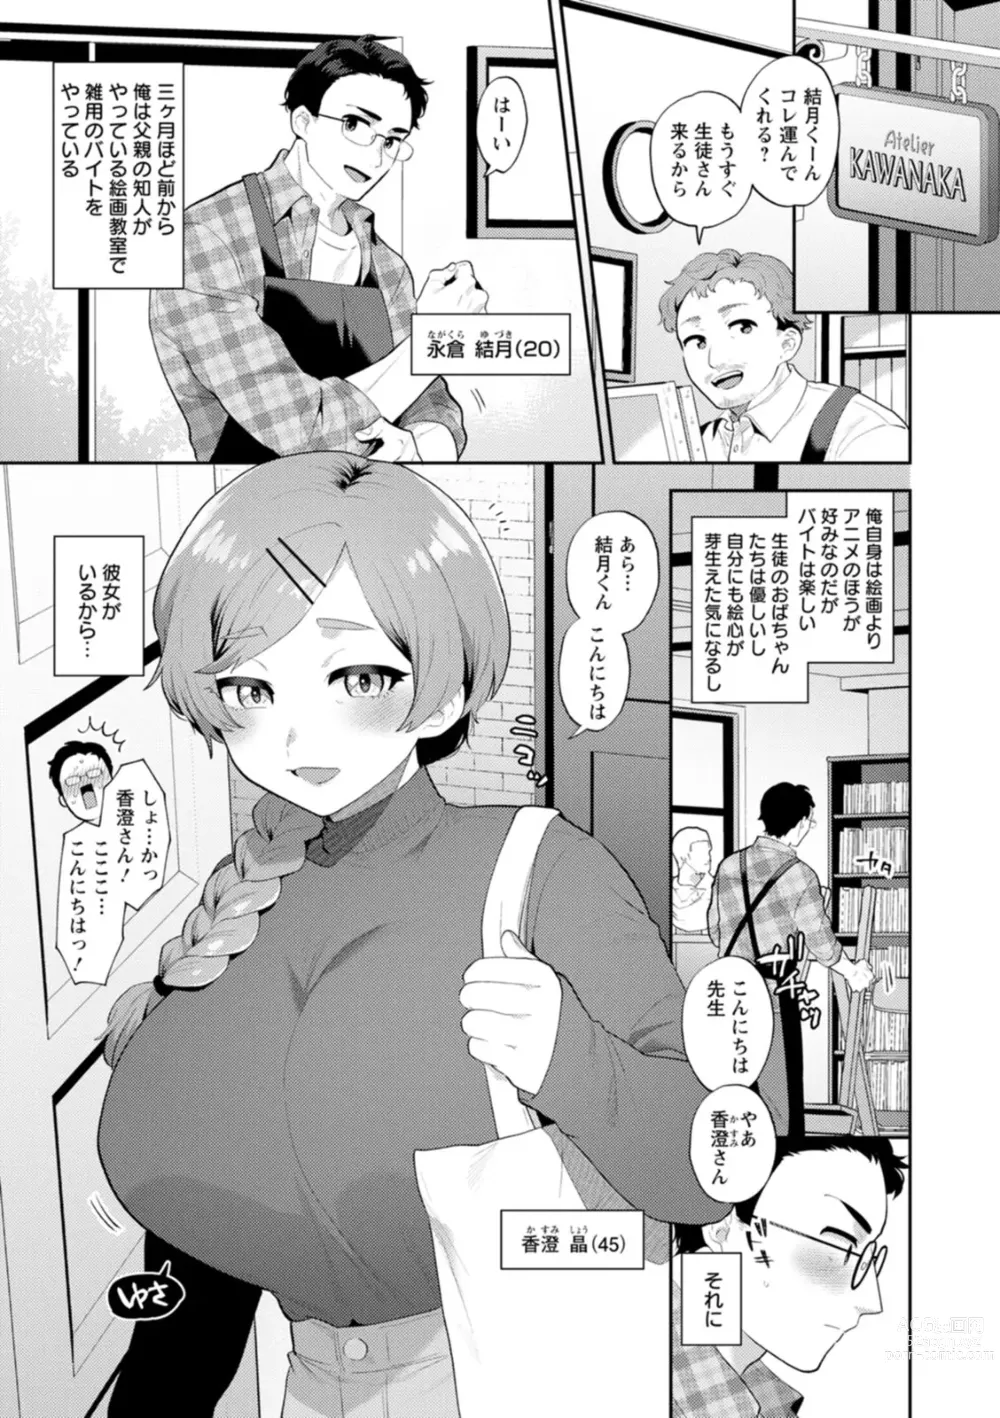 Page 7 of manga Kimito Torokete Musubarete